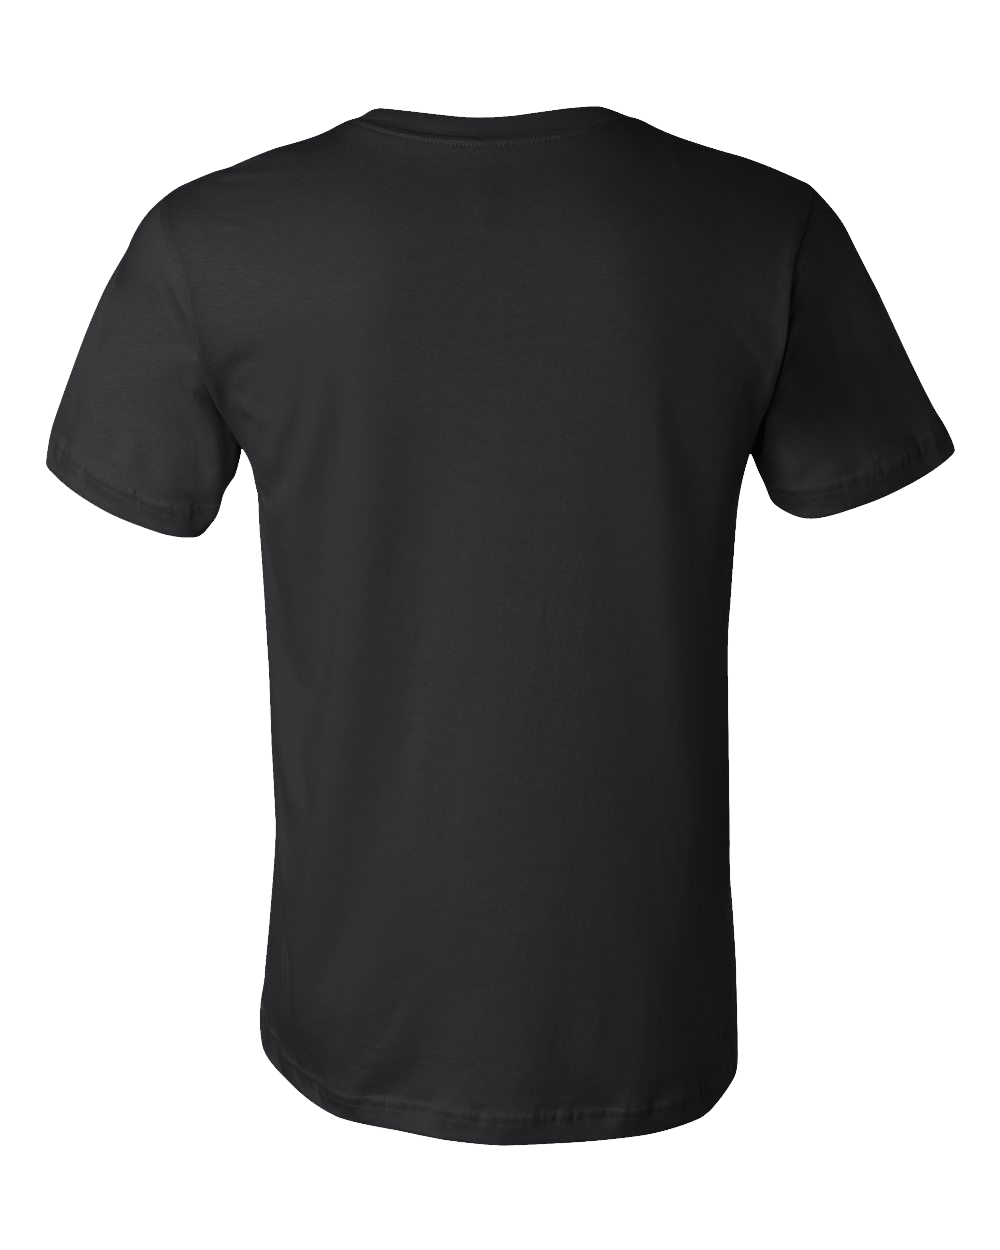 Standard Black Apex, NC | Retro, Vintage Style North Carolina Pride  T-shirt